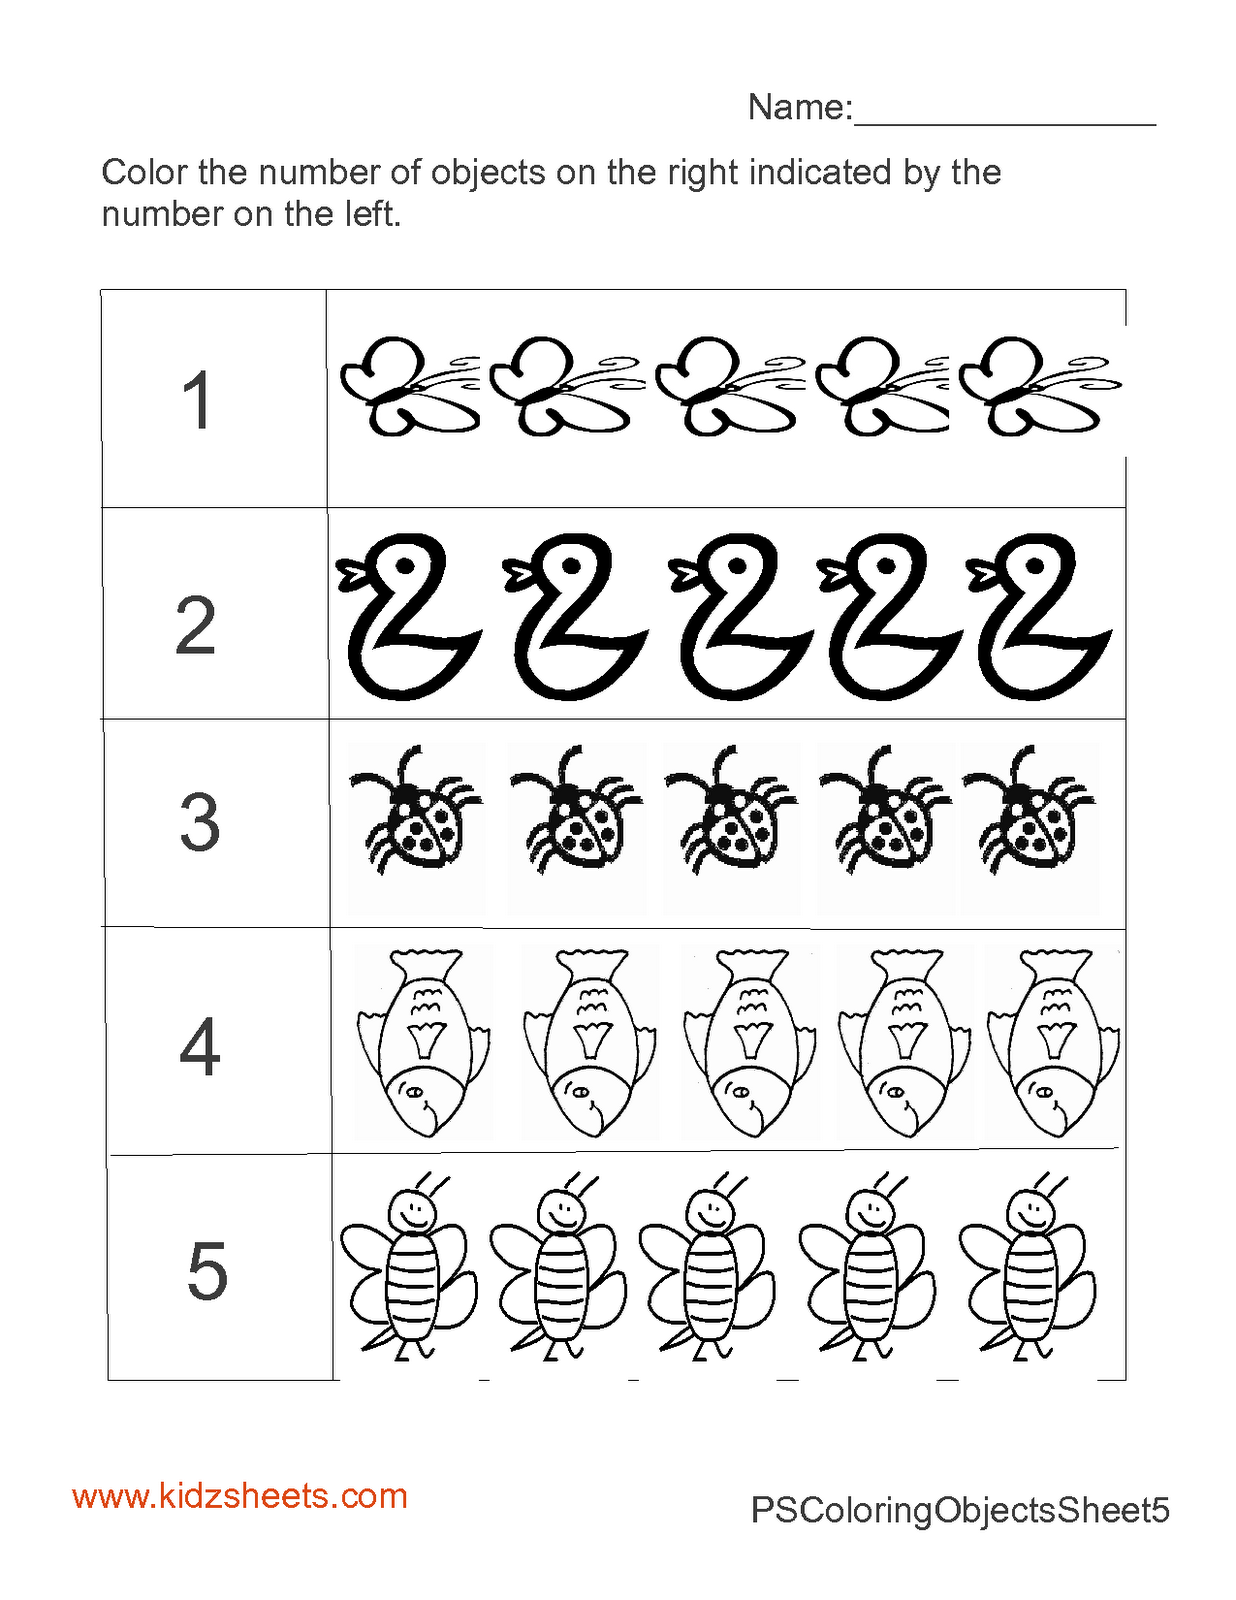 Preschool Counting Worksheets Free Printable Numbers Counting